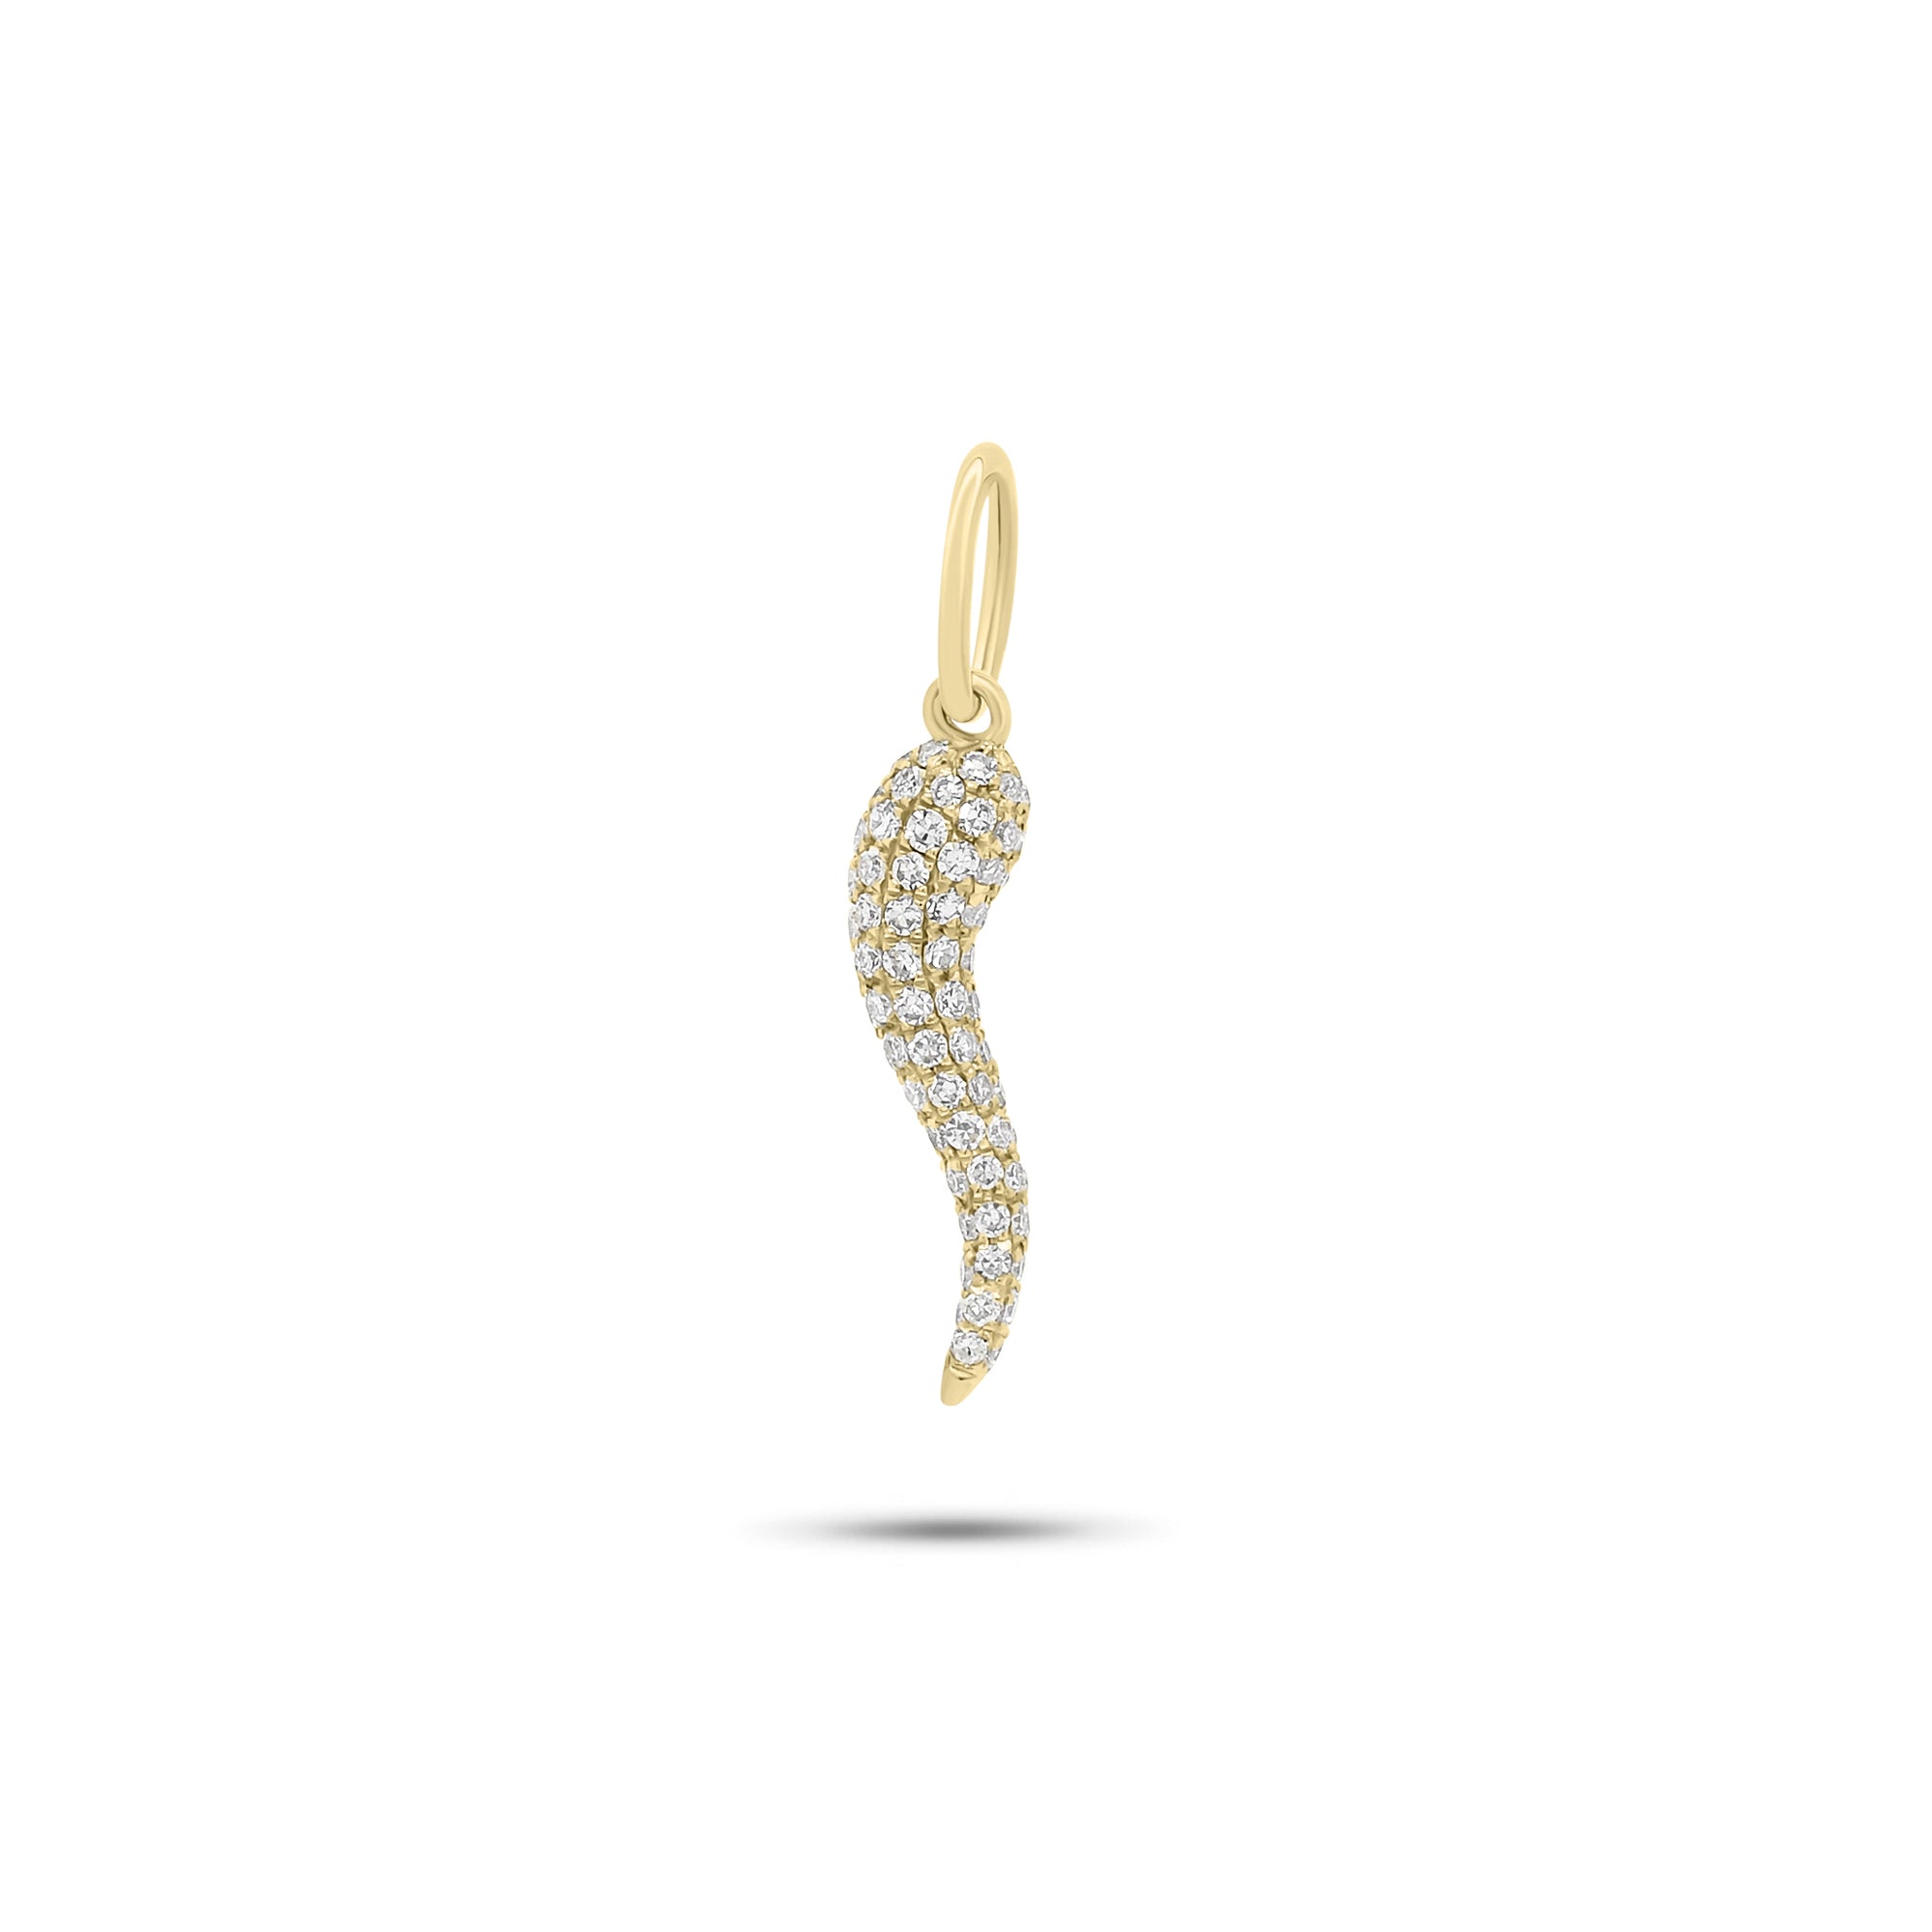 Pave Diamond Italian Horn Pendant - 14K gold weighing 0.47 grams  - 106 round diamonds weighing 0.27 carats